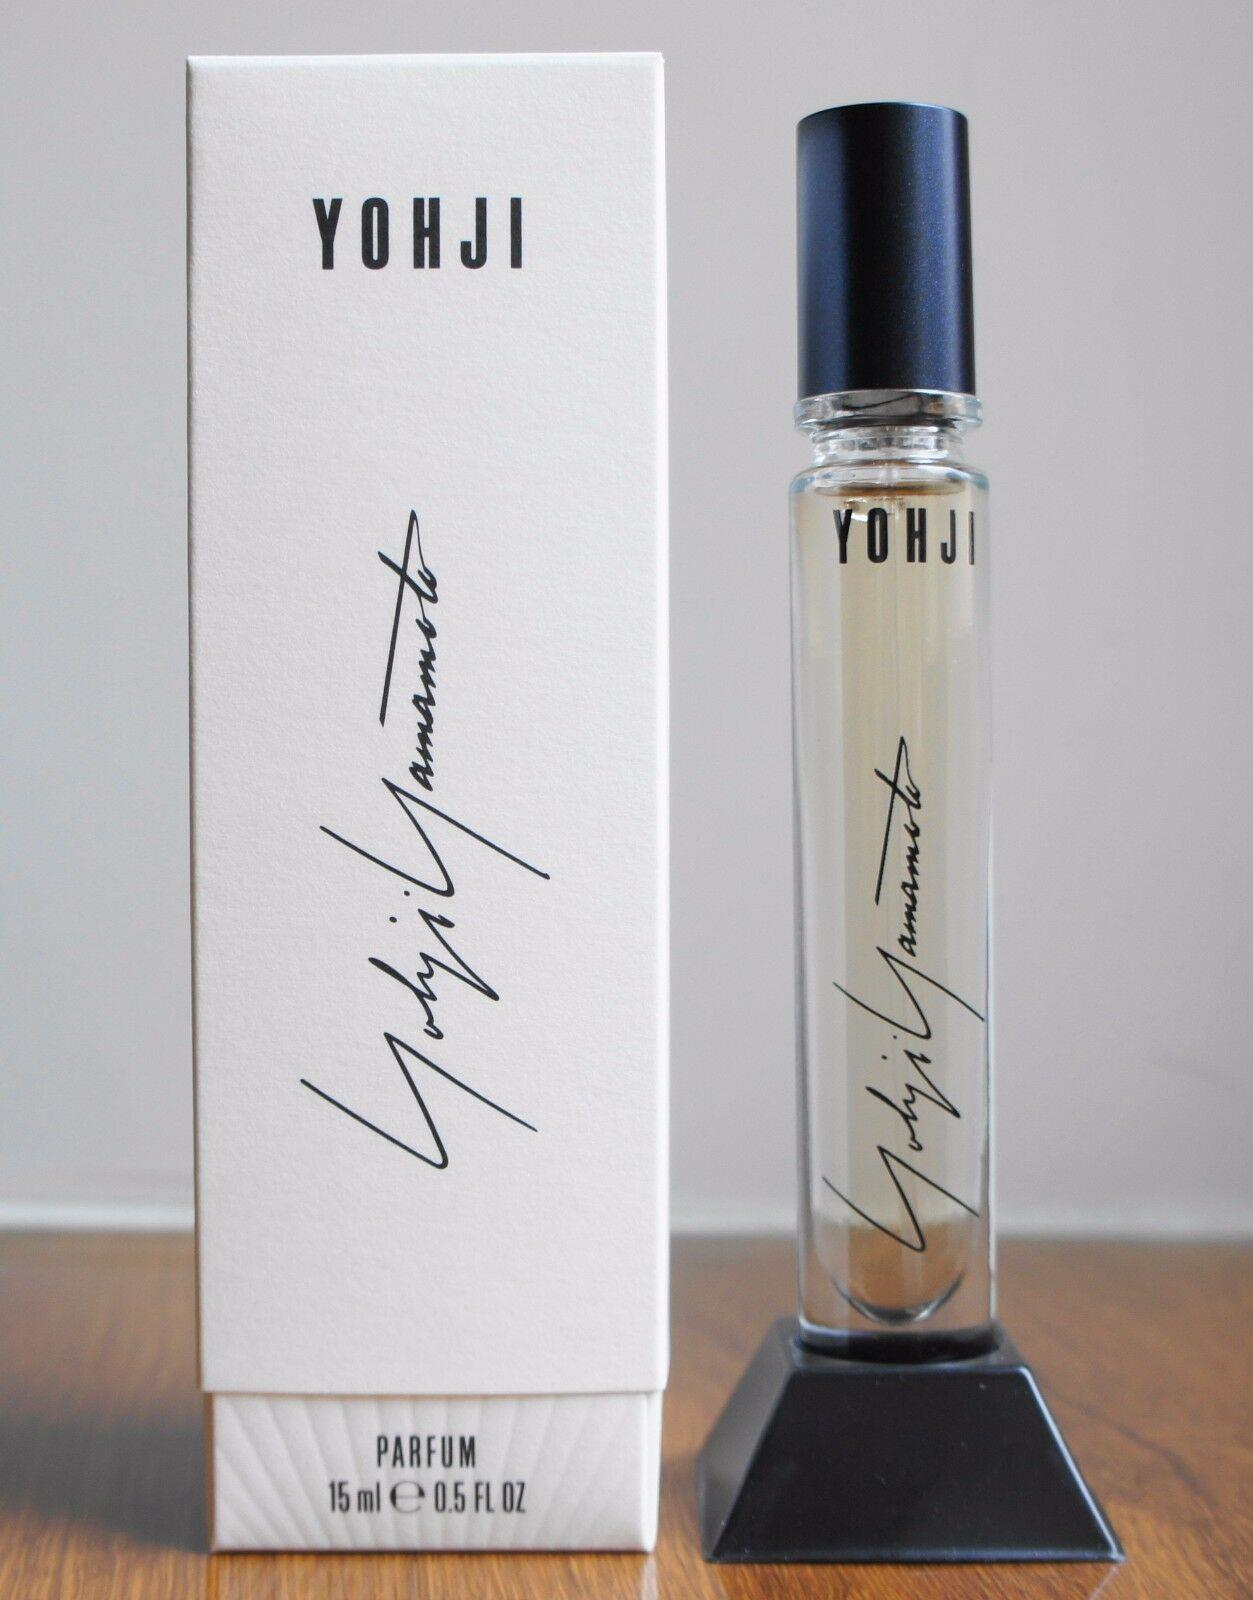 Yohji by Yohji Yamamoto for Women Parfum- Decanted Fragrances and ...